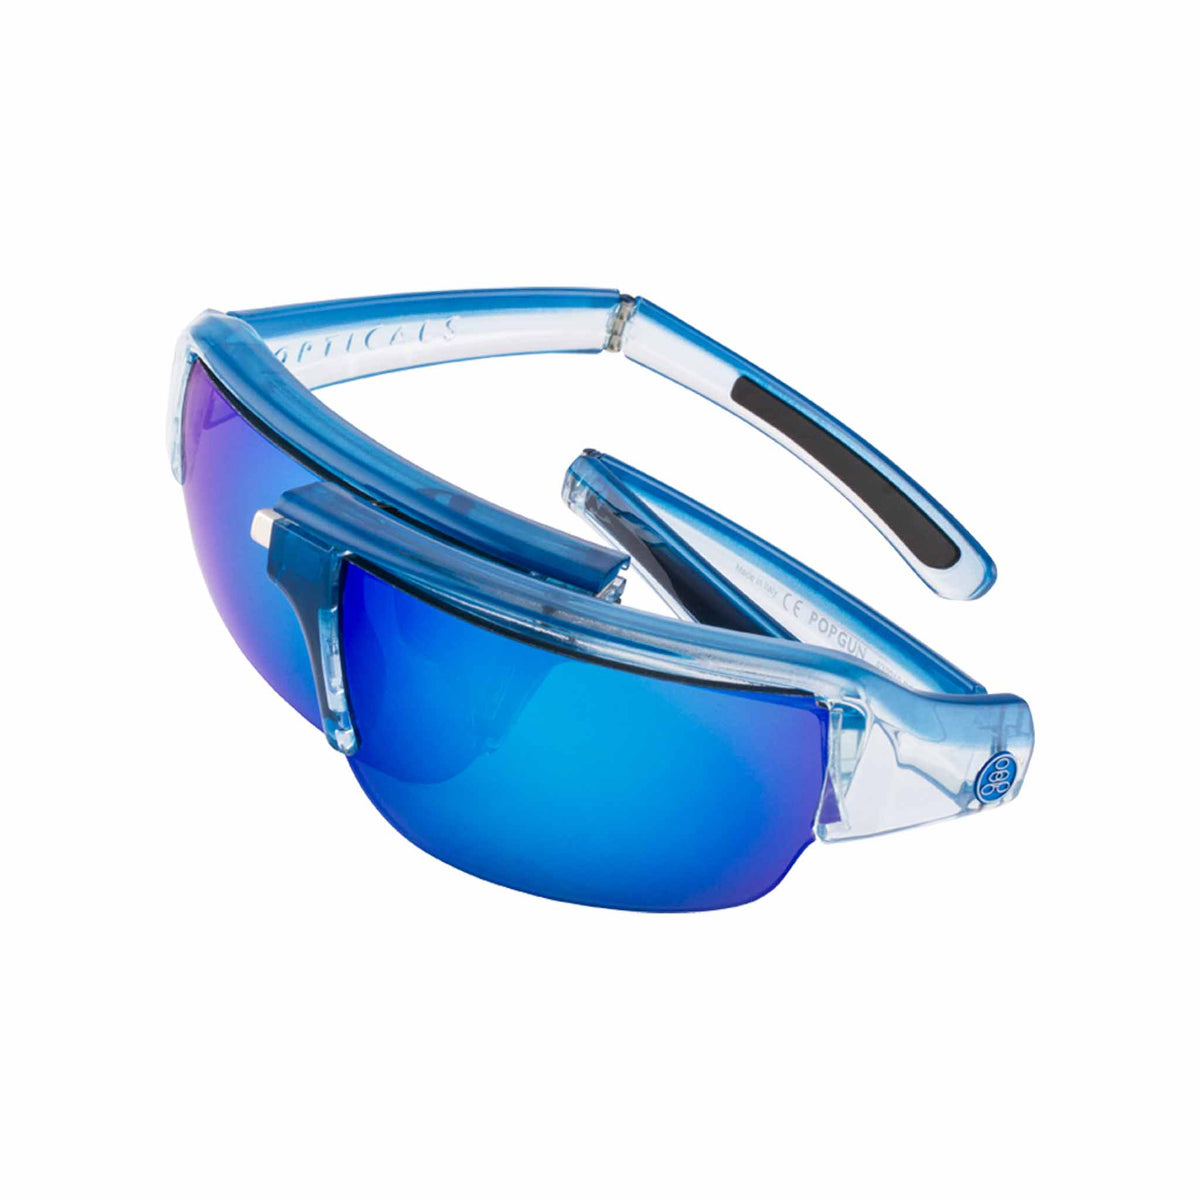 Popticals, Premium Compact Sunglasses, PopGun, 030010-BFUN, Polarized Sunglasses, Gloss Blue/Clear Crystal Frame, Gray Lenses w/Blue Mirror Finish, Spider View